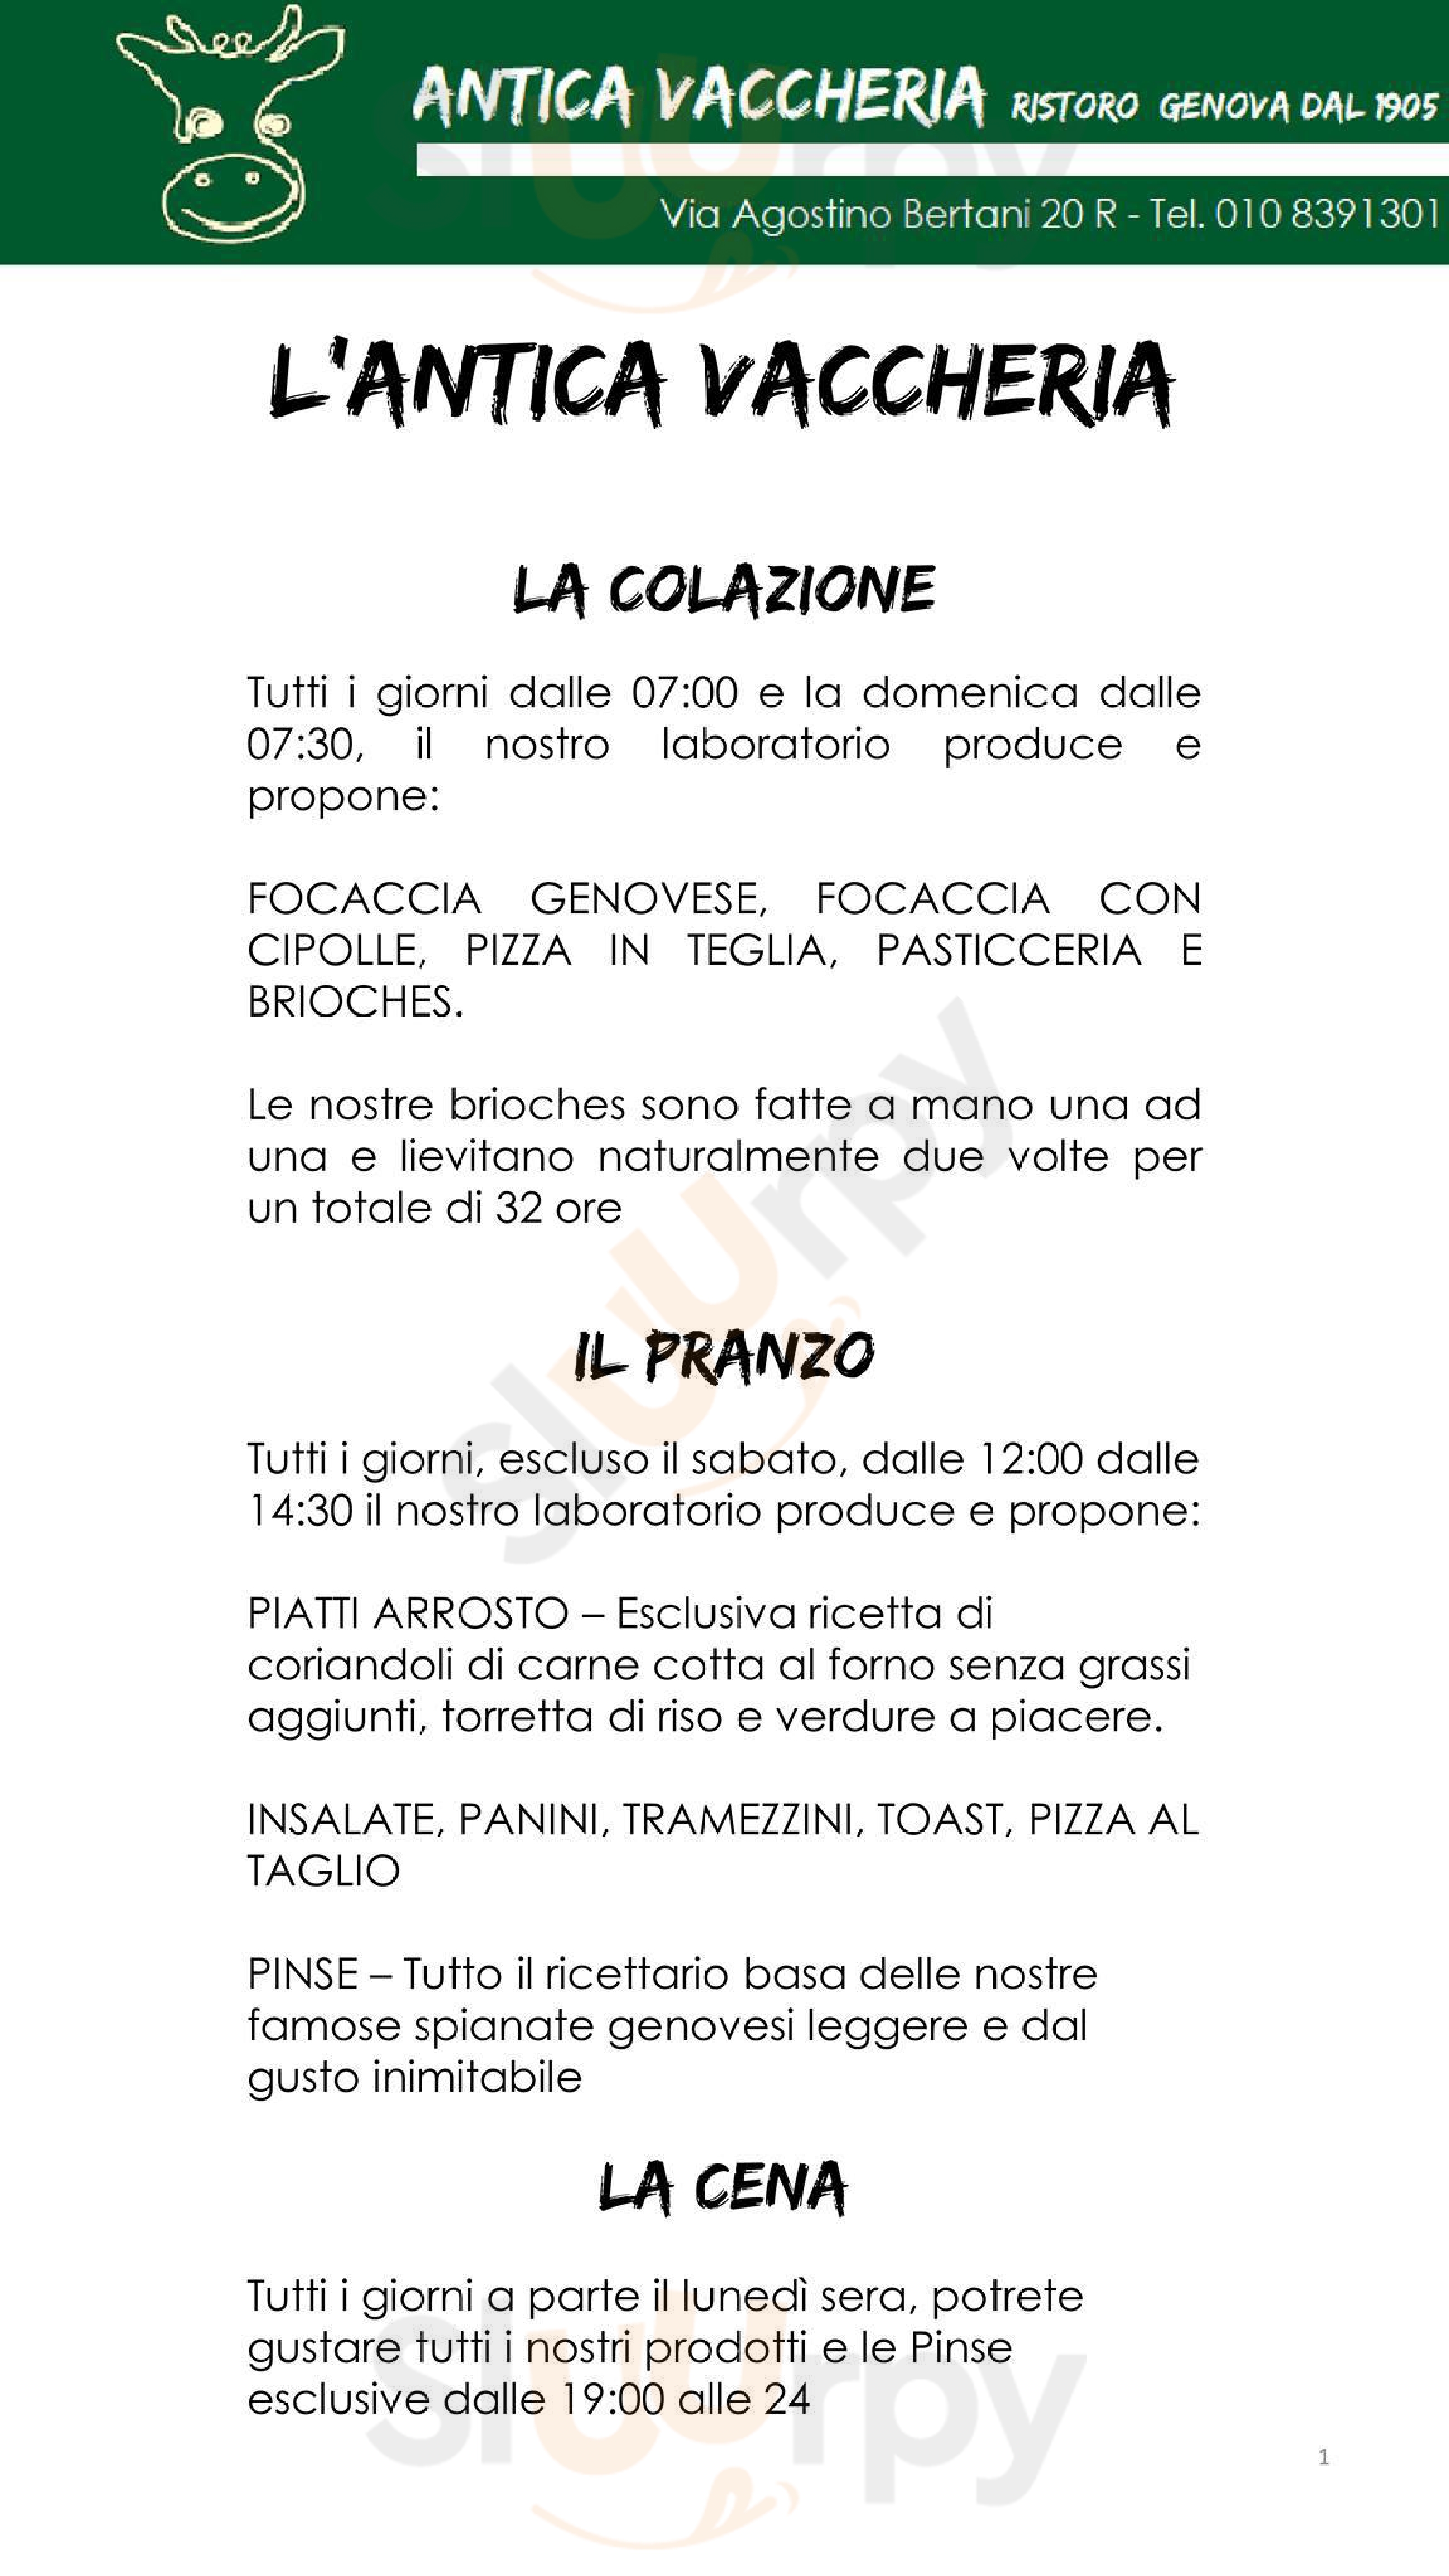 Antica Vaccheria Genova menù 1 pagina